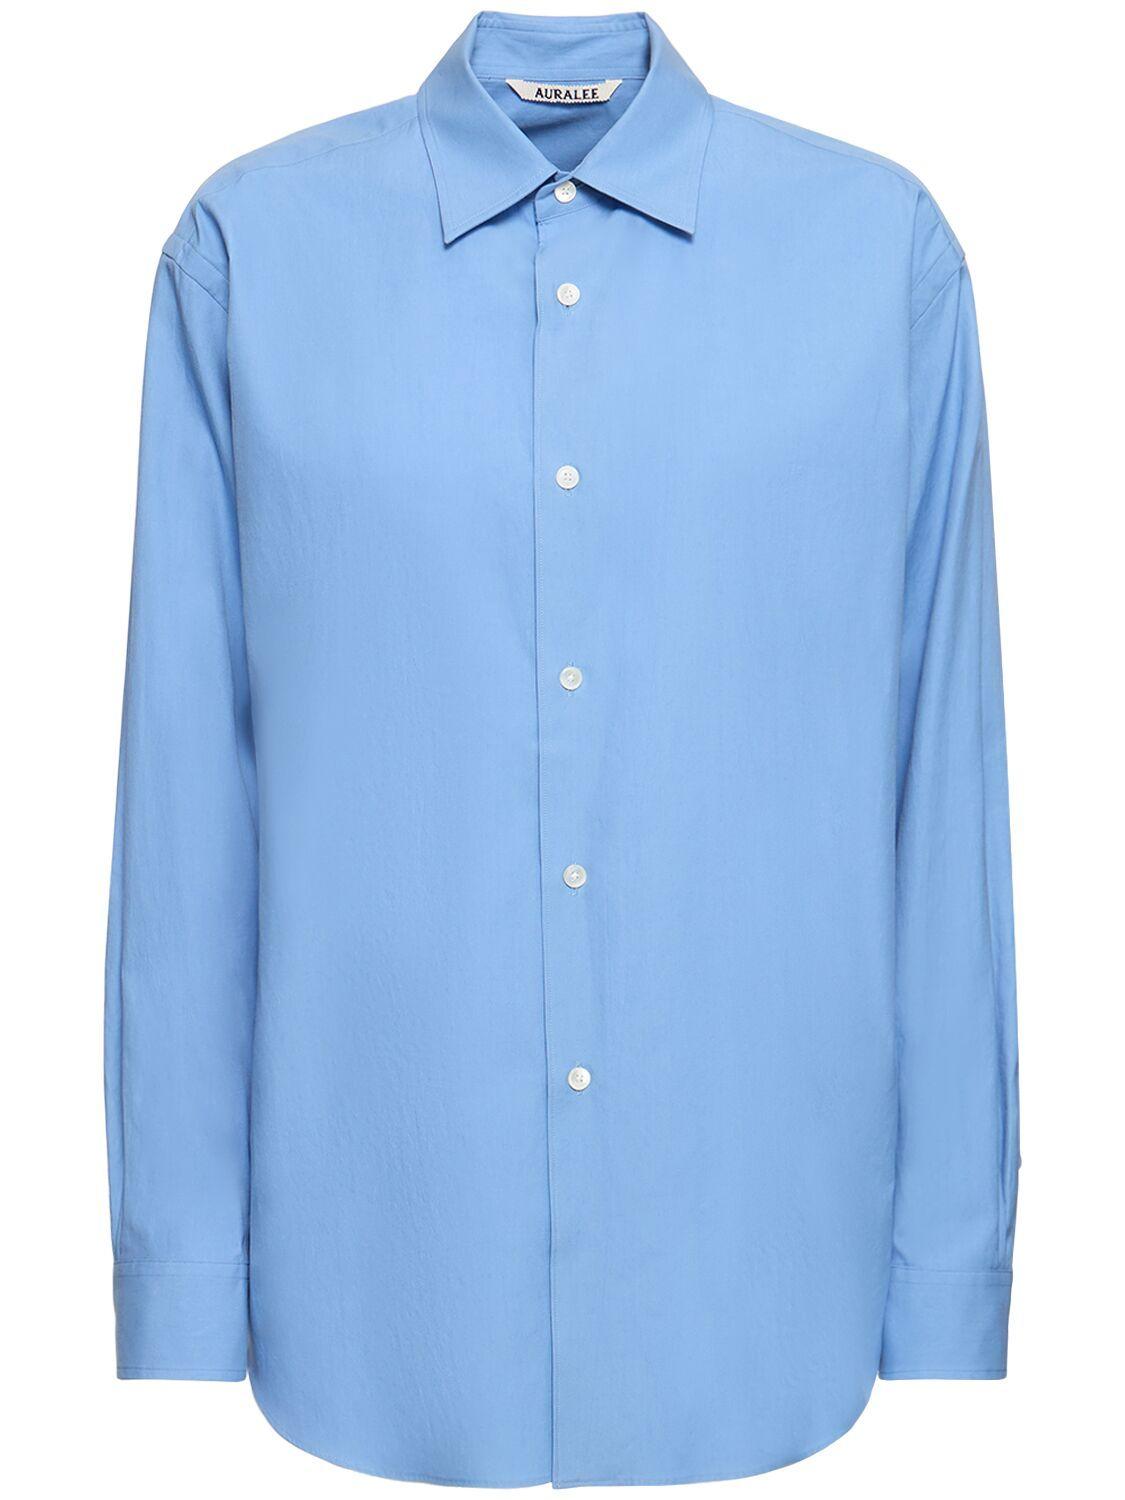 AURALEE Washed Finx Twill Cotton Shirt in Blue | Lyst